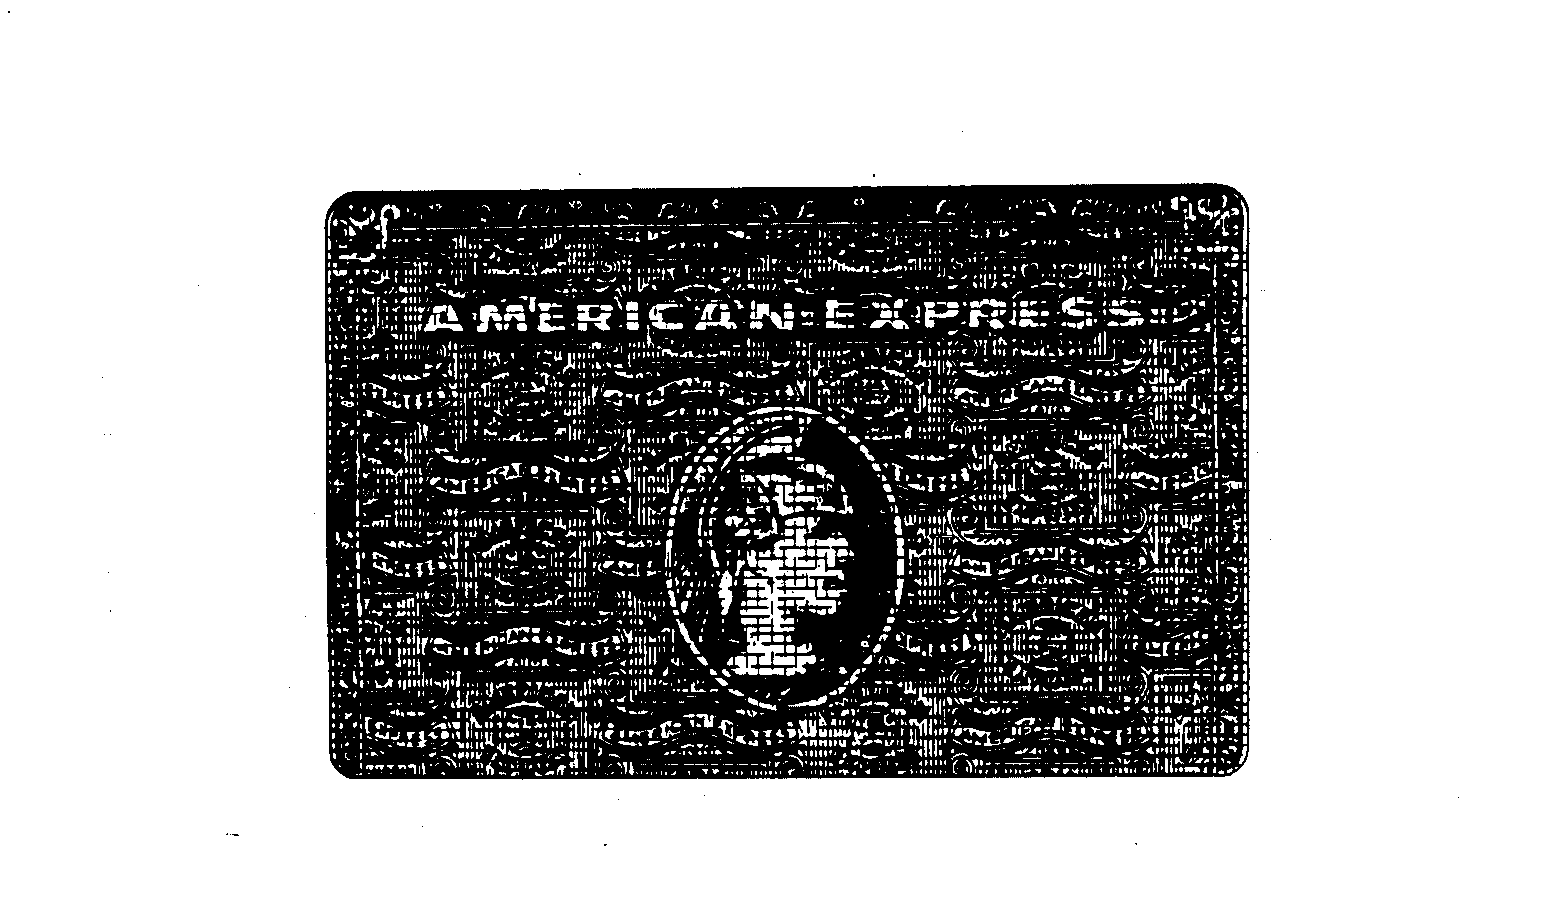 Trademark Logo AMERICAN EXPRESS